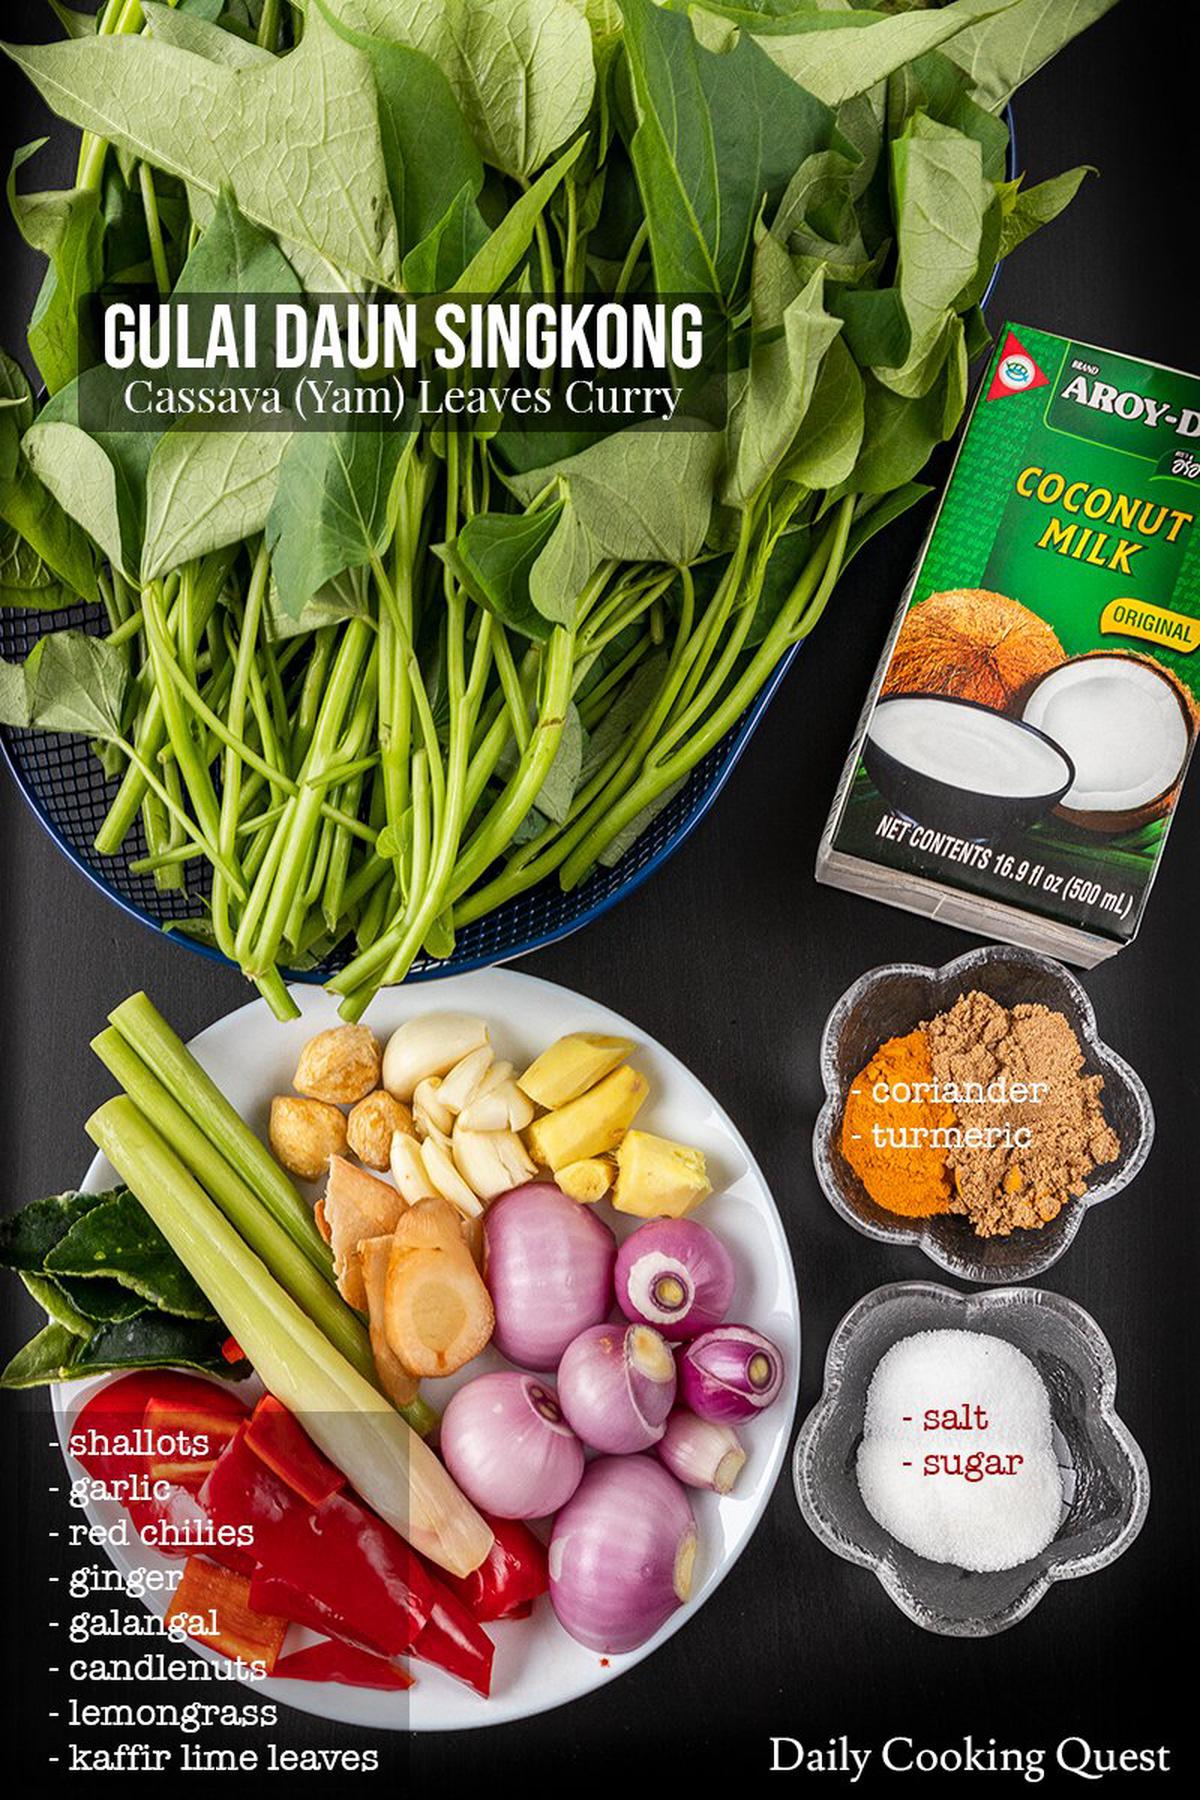 Ingredients to prepare gulai daun singkong: cassava/yam leaves, coconut milk, shallots, garlic, red chilies, ginger, galangal, candlenuts, lemongrass, kaffir lime leaves, coriander, turmeric, salt, and sugar.